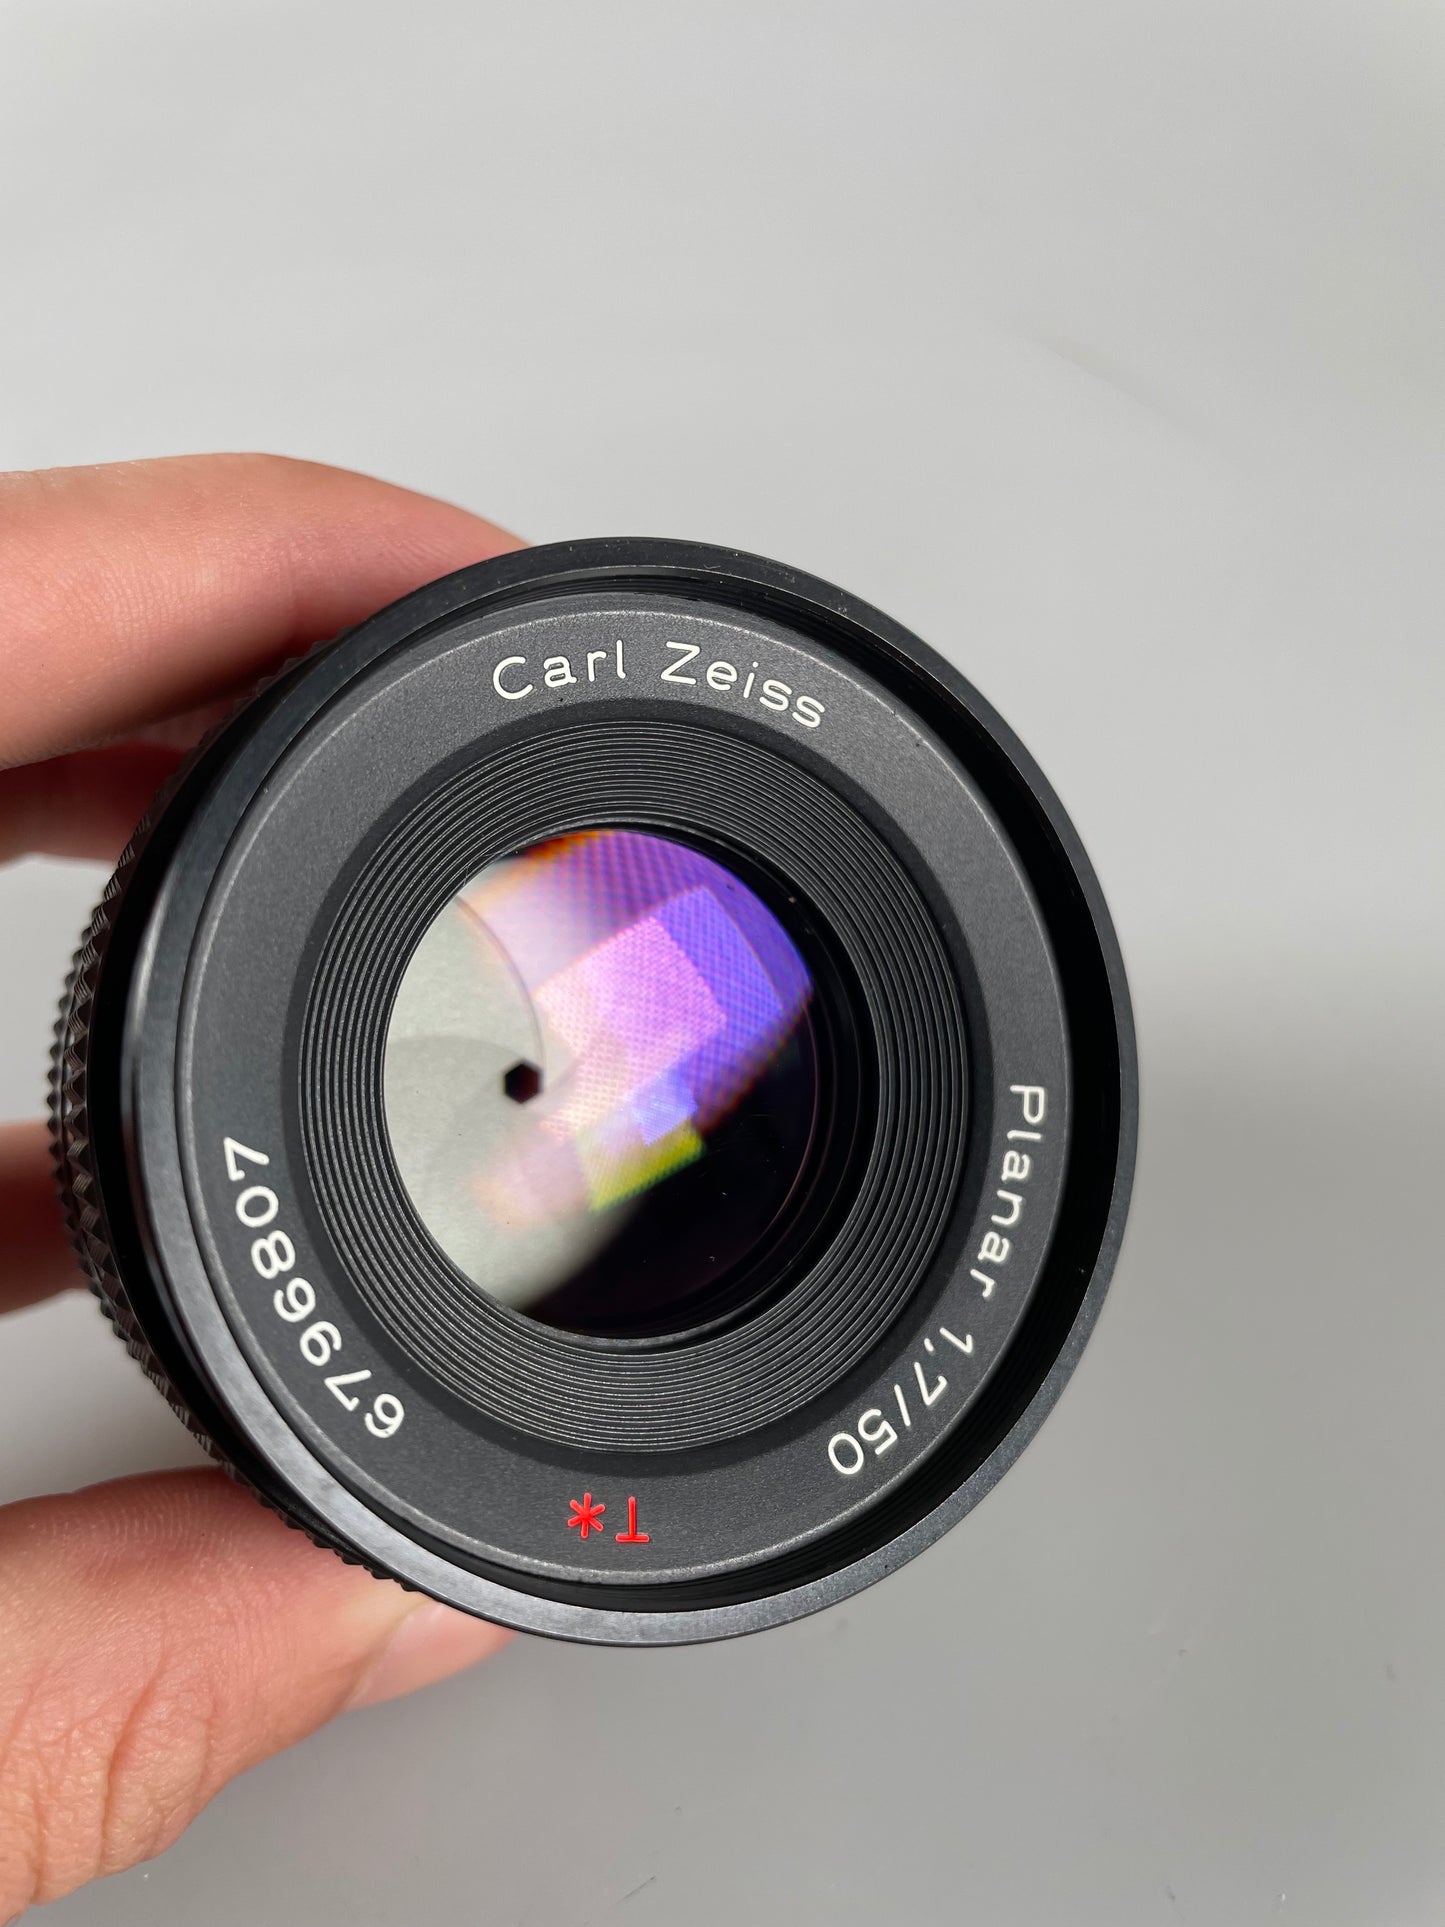 Contax Carl Zeiss Planar T* 50mm F/1.7 Lens CY Mount AEJ